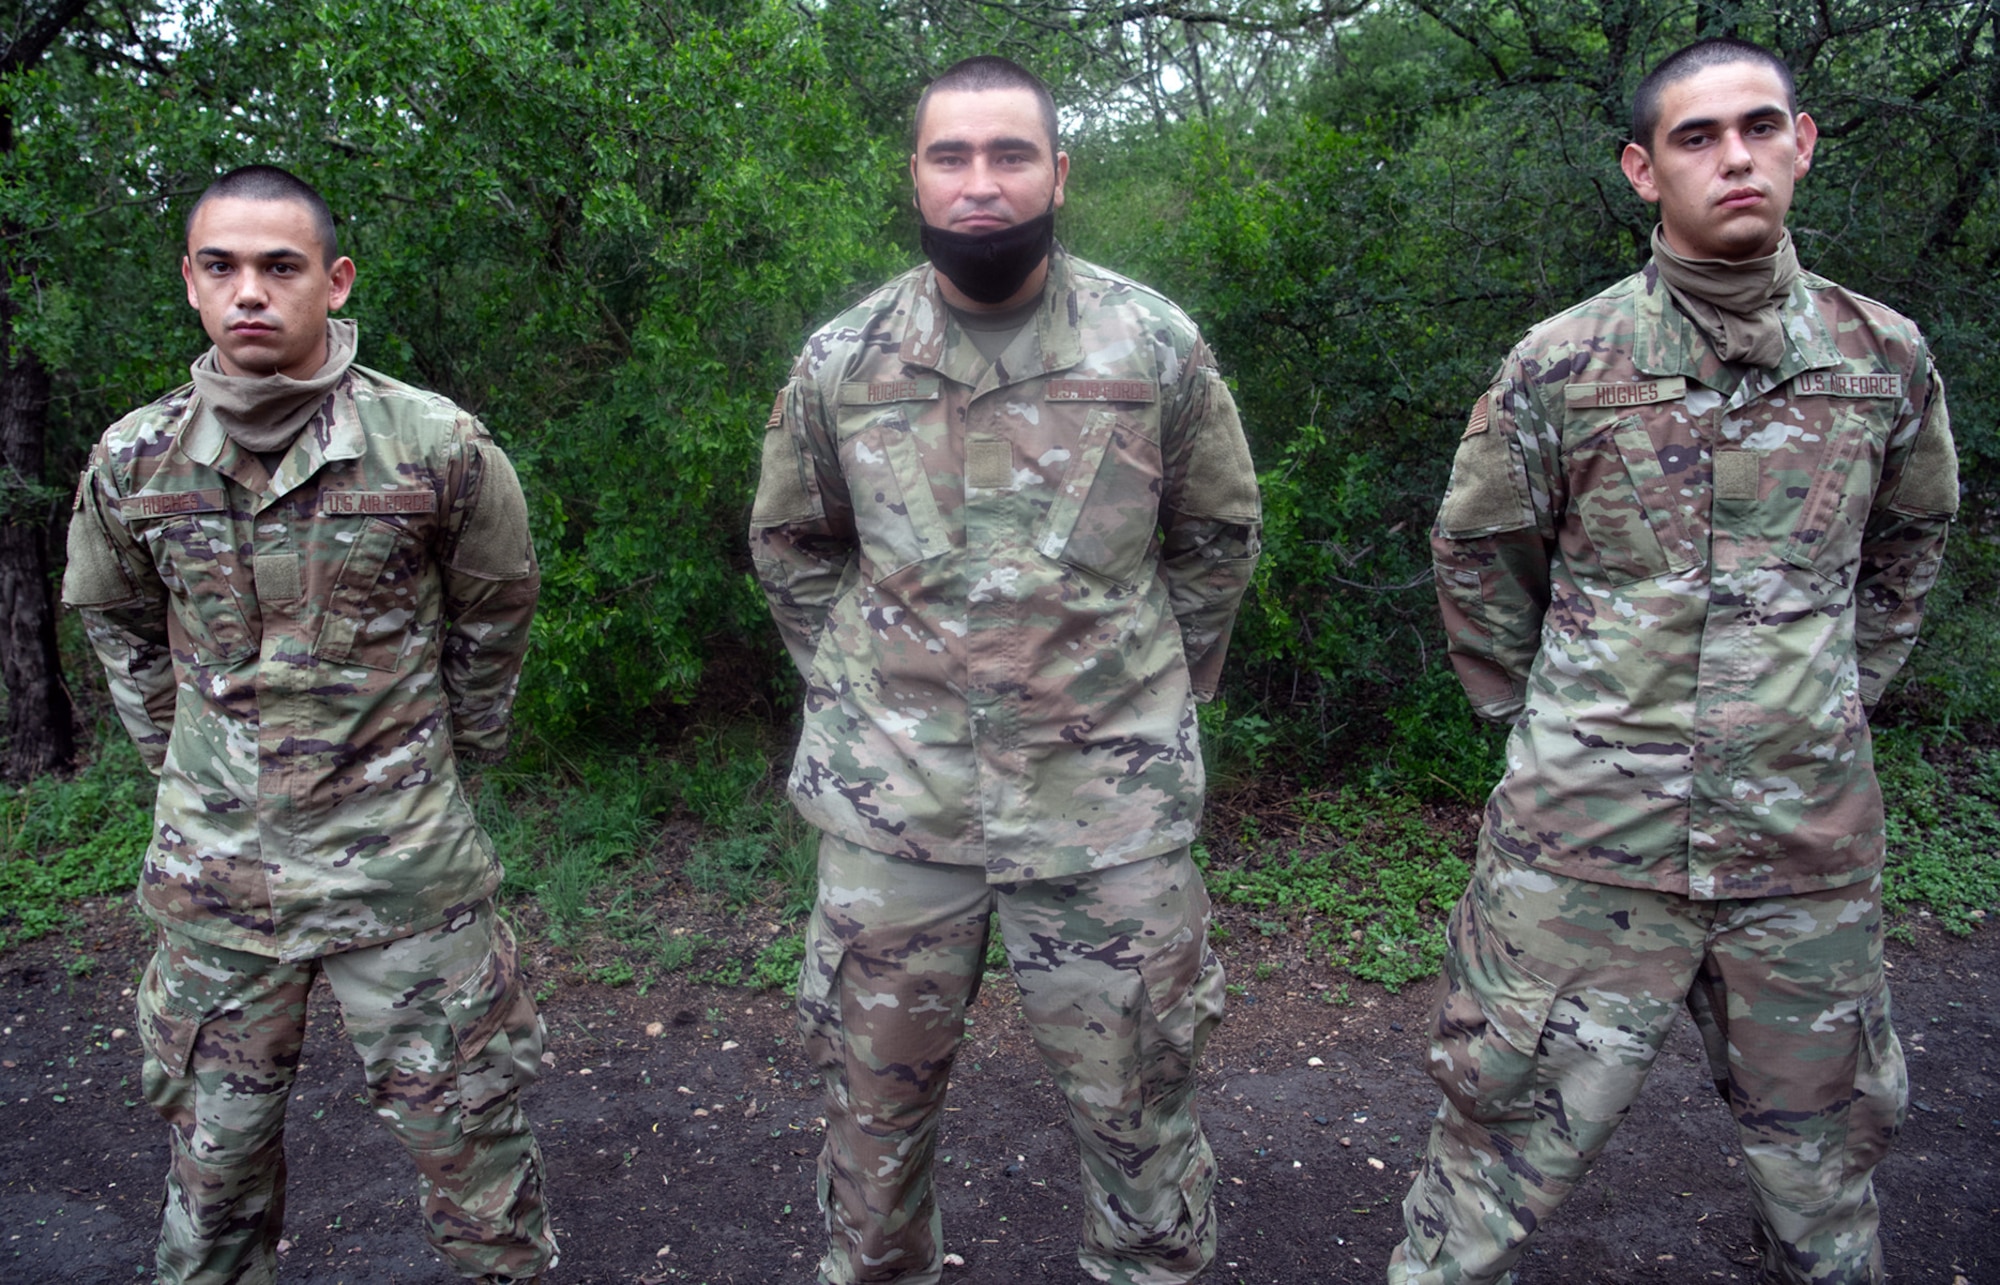 Daniel (left), Jesus (center), and Nicolas (right) Hughes, U.S. Air Force basic training trainees